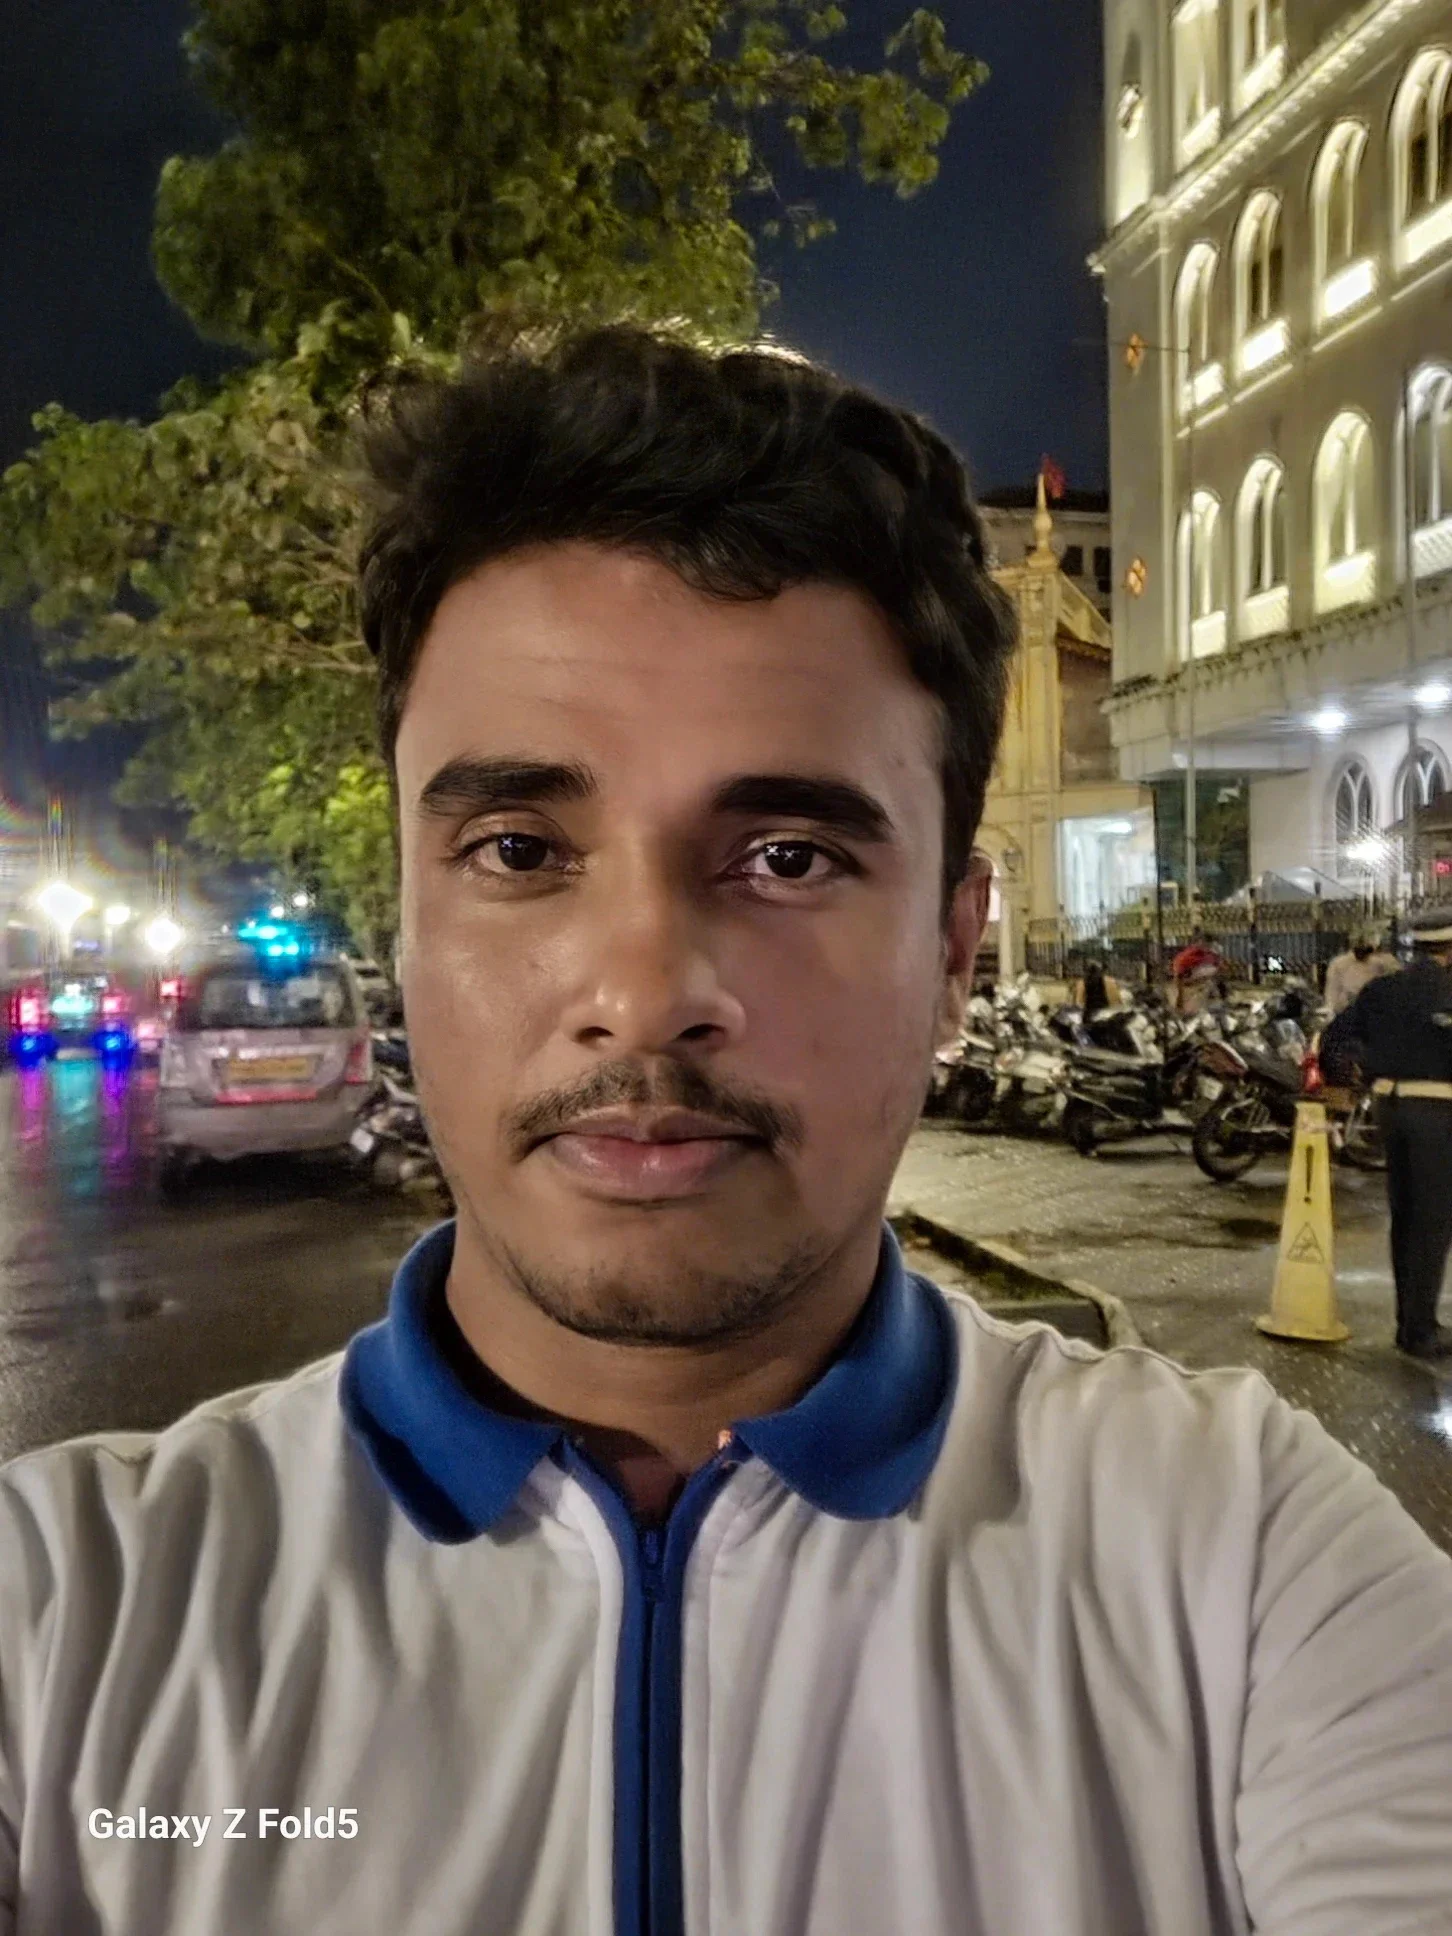 Samsung Galaxy Z Fold 5 Review: Selfie camera sample at night